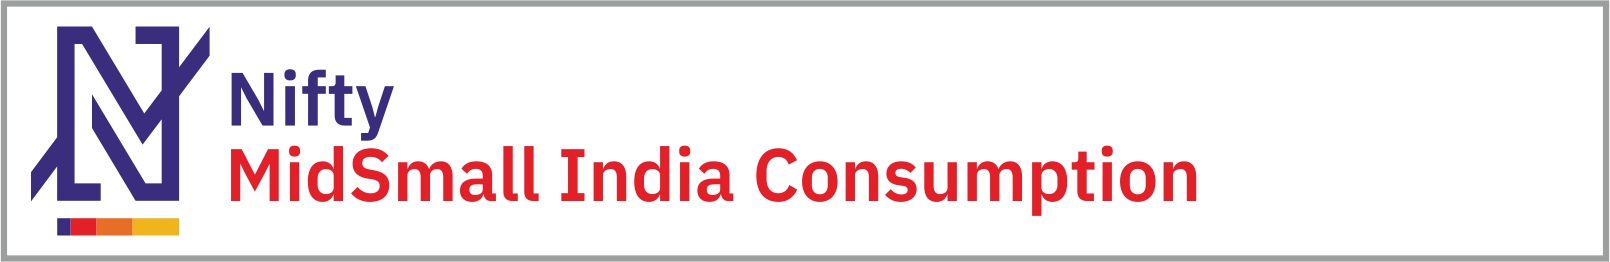 Nifty MidSmall India Consumption logo